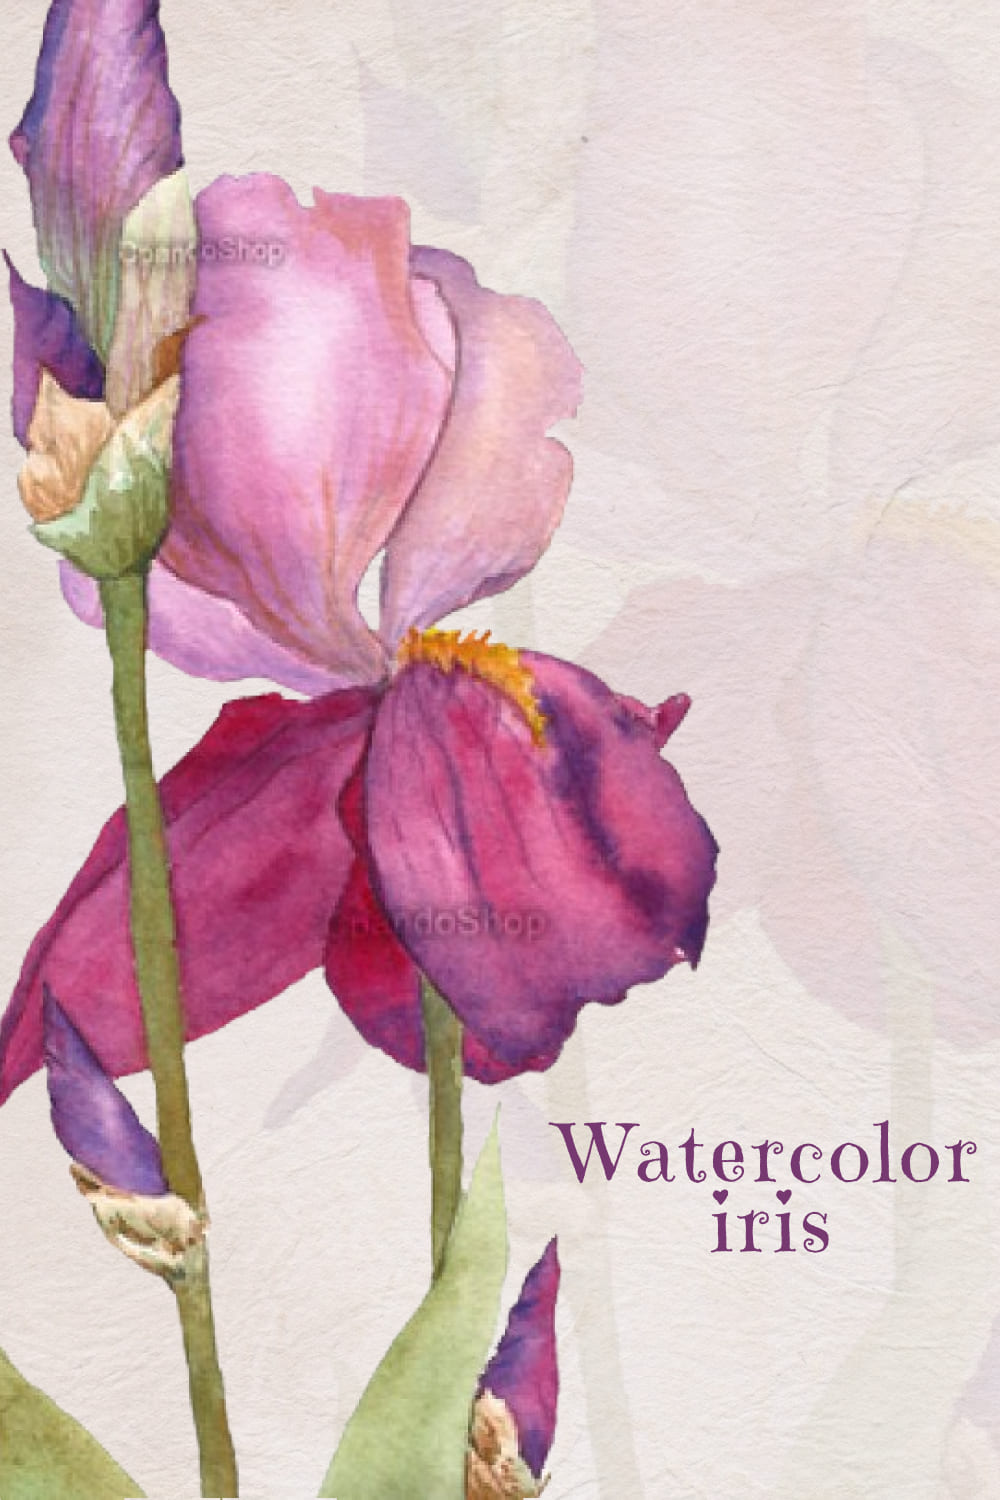 Watercolor Iris Clip Art pinterest image.